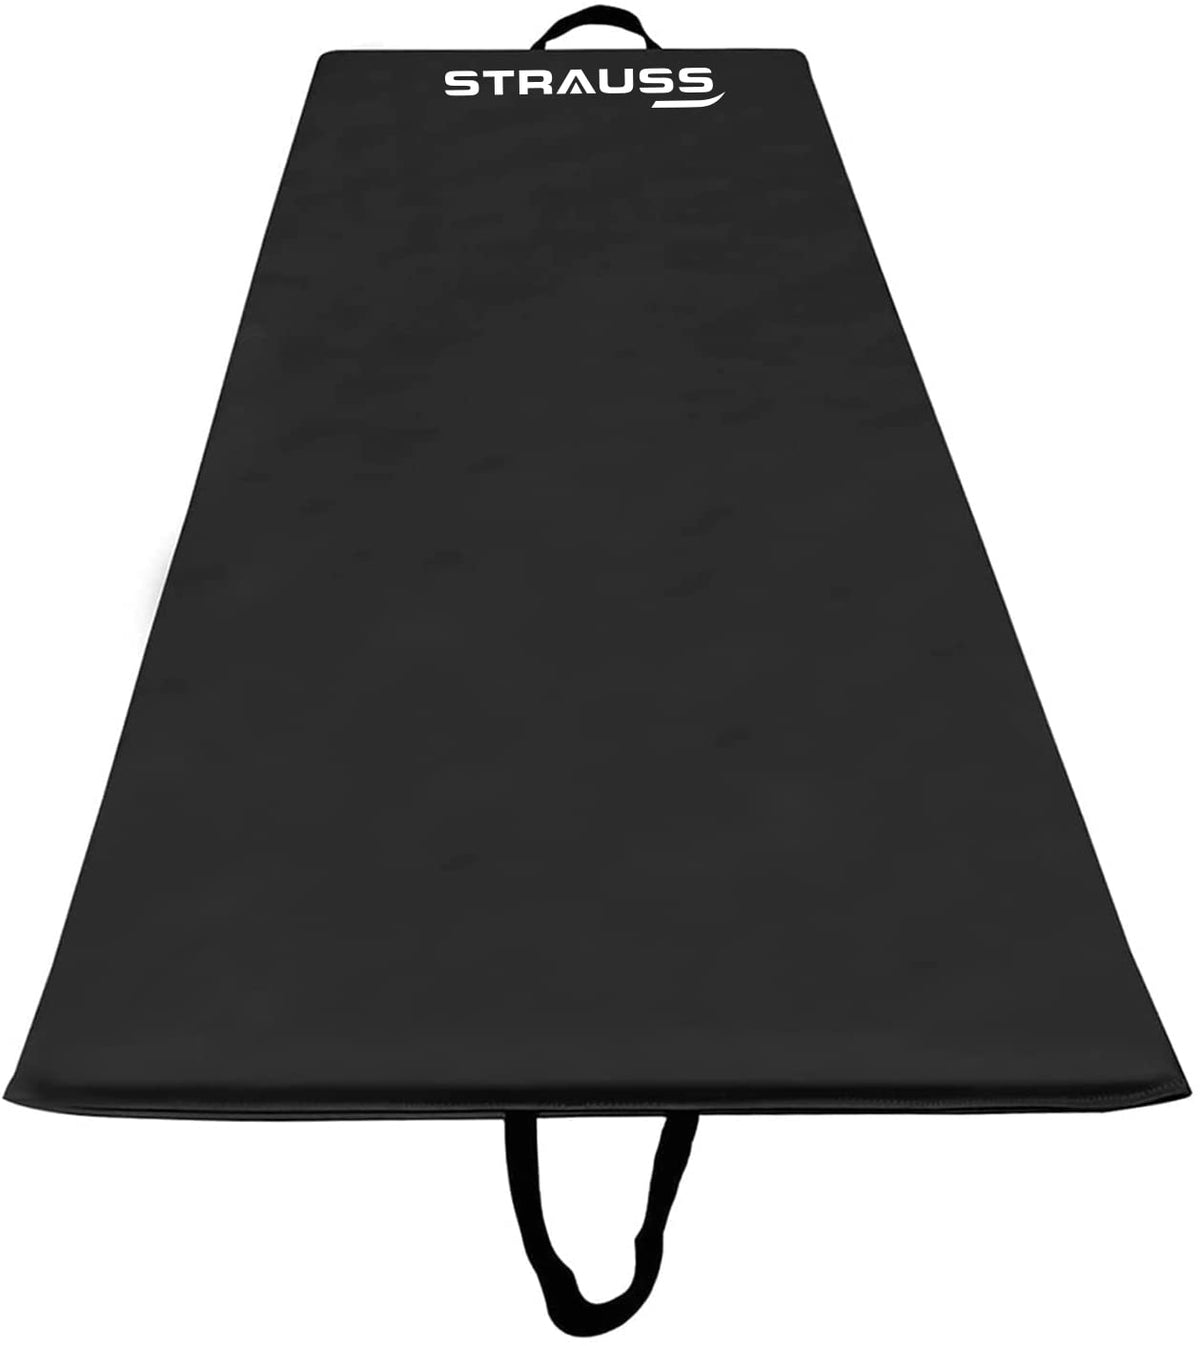 Strauss Yoga Mat Rolling, 12 mm (Black)